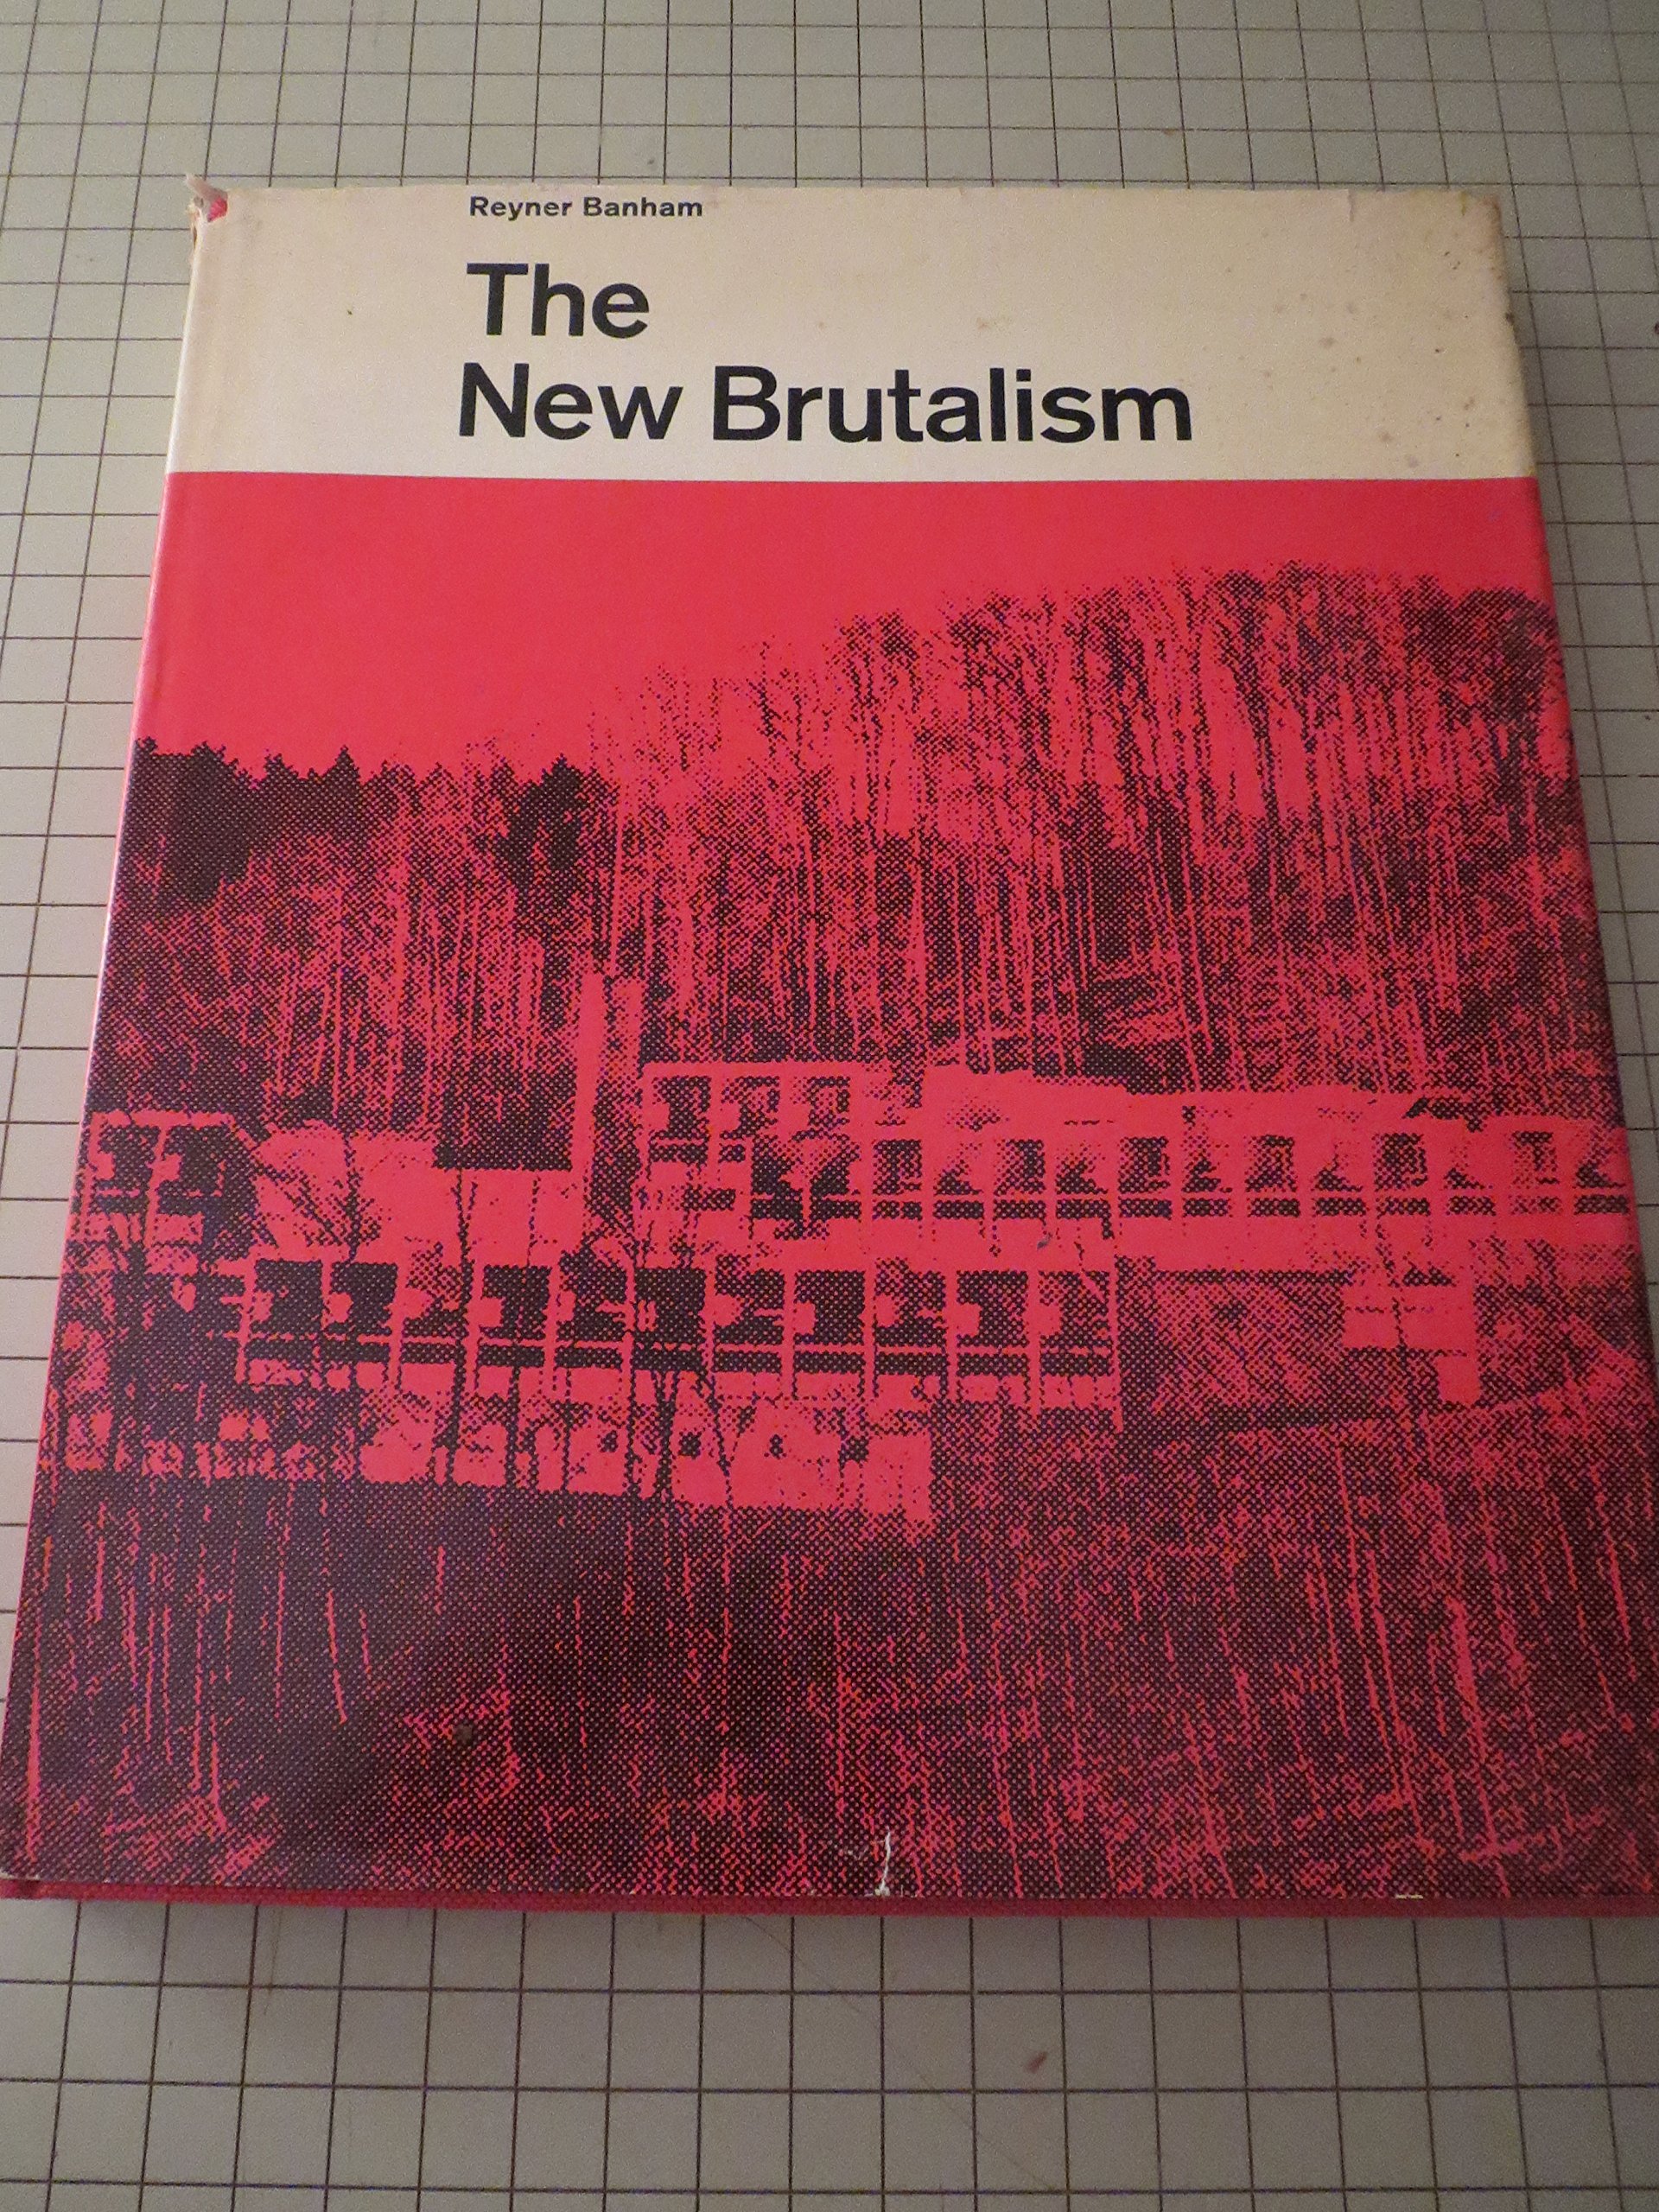 the new brutalism ethic or aesthetic reyner banham pdf